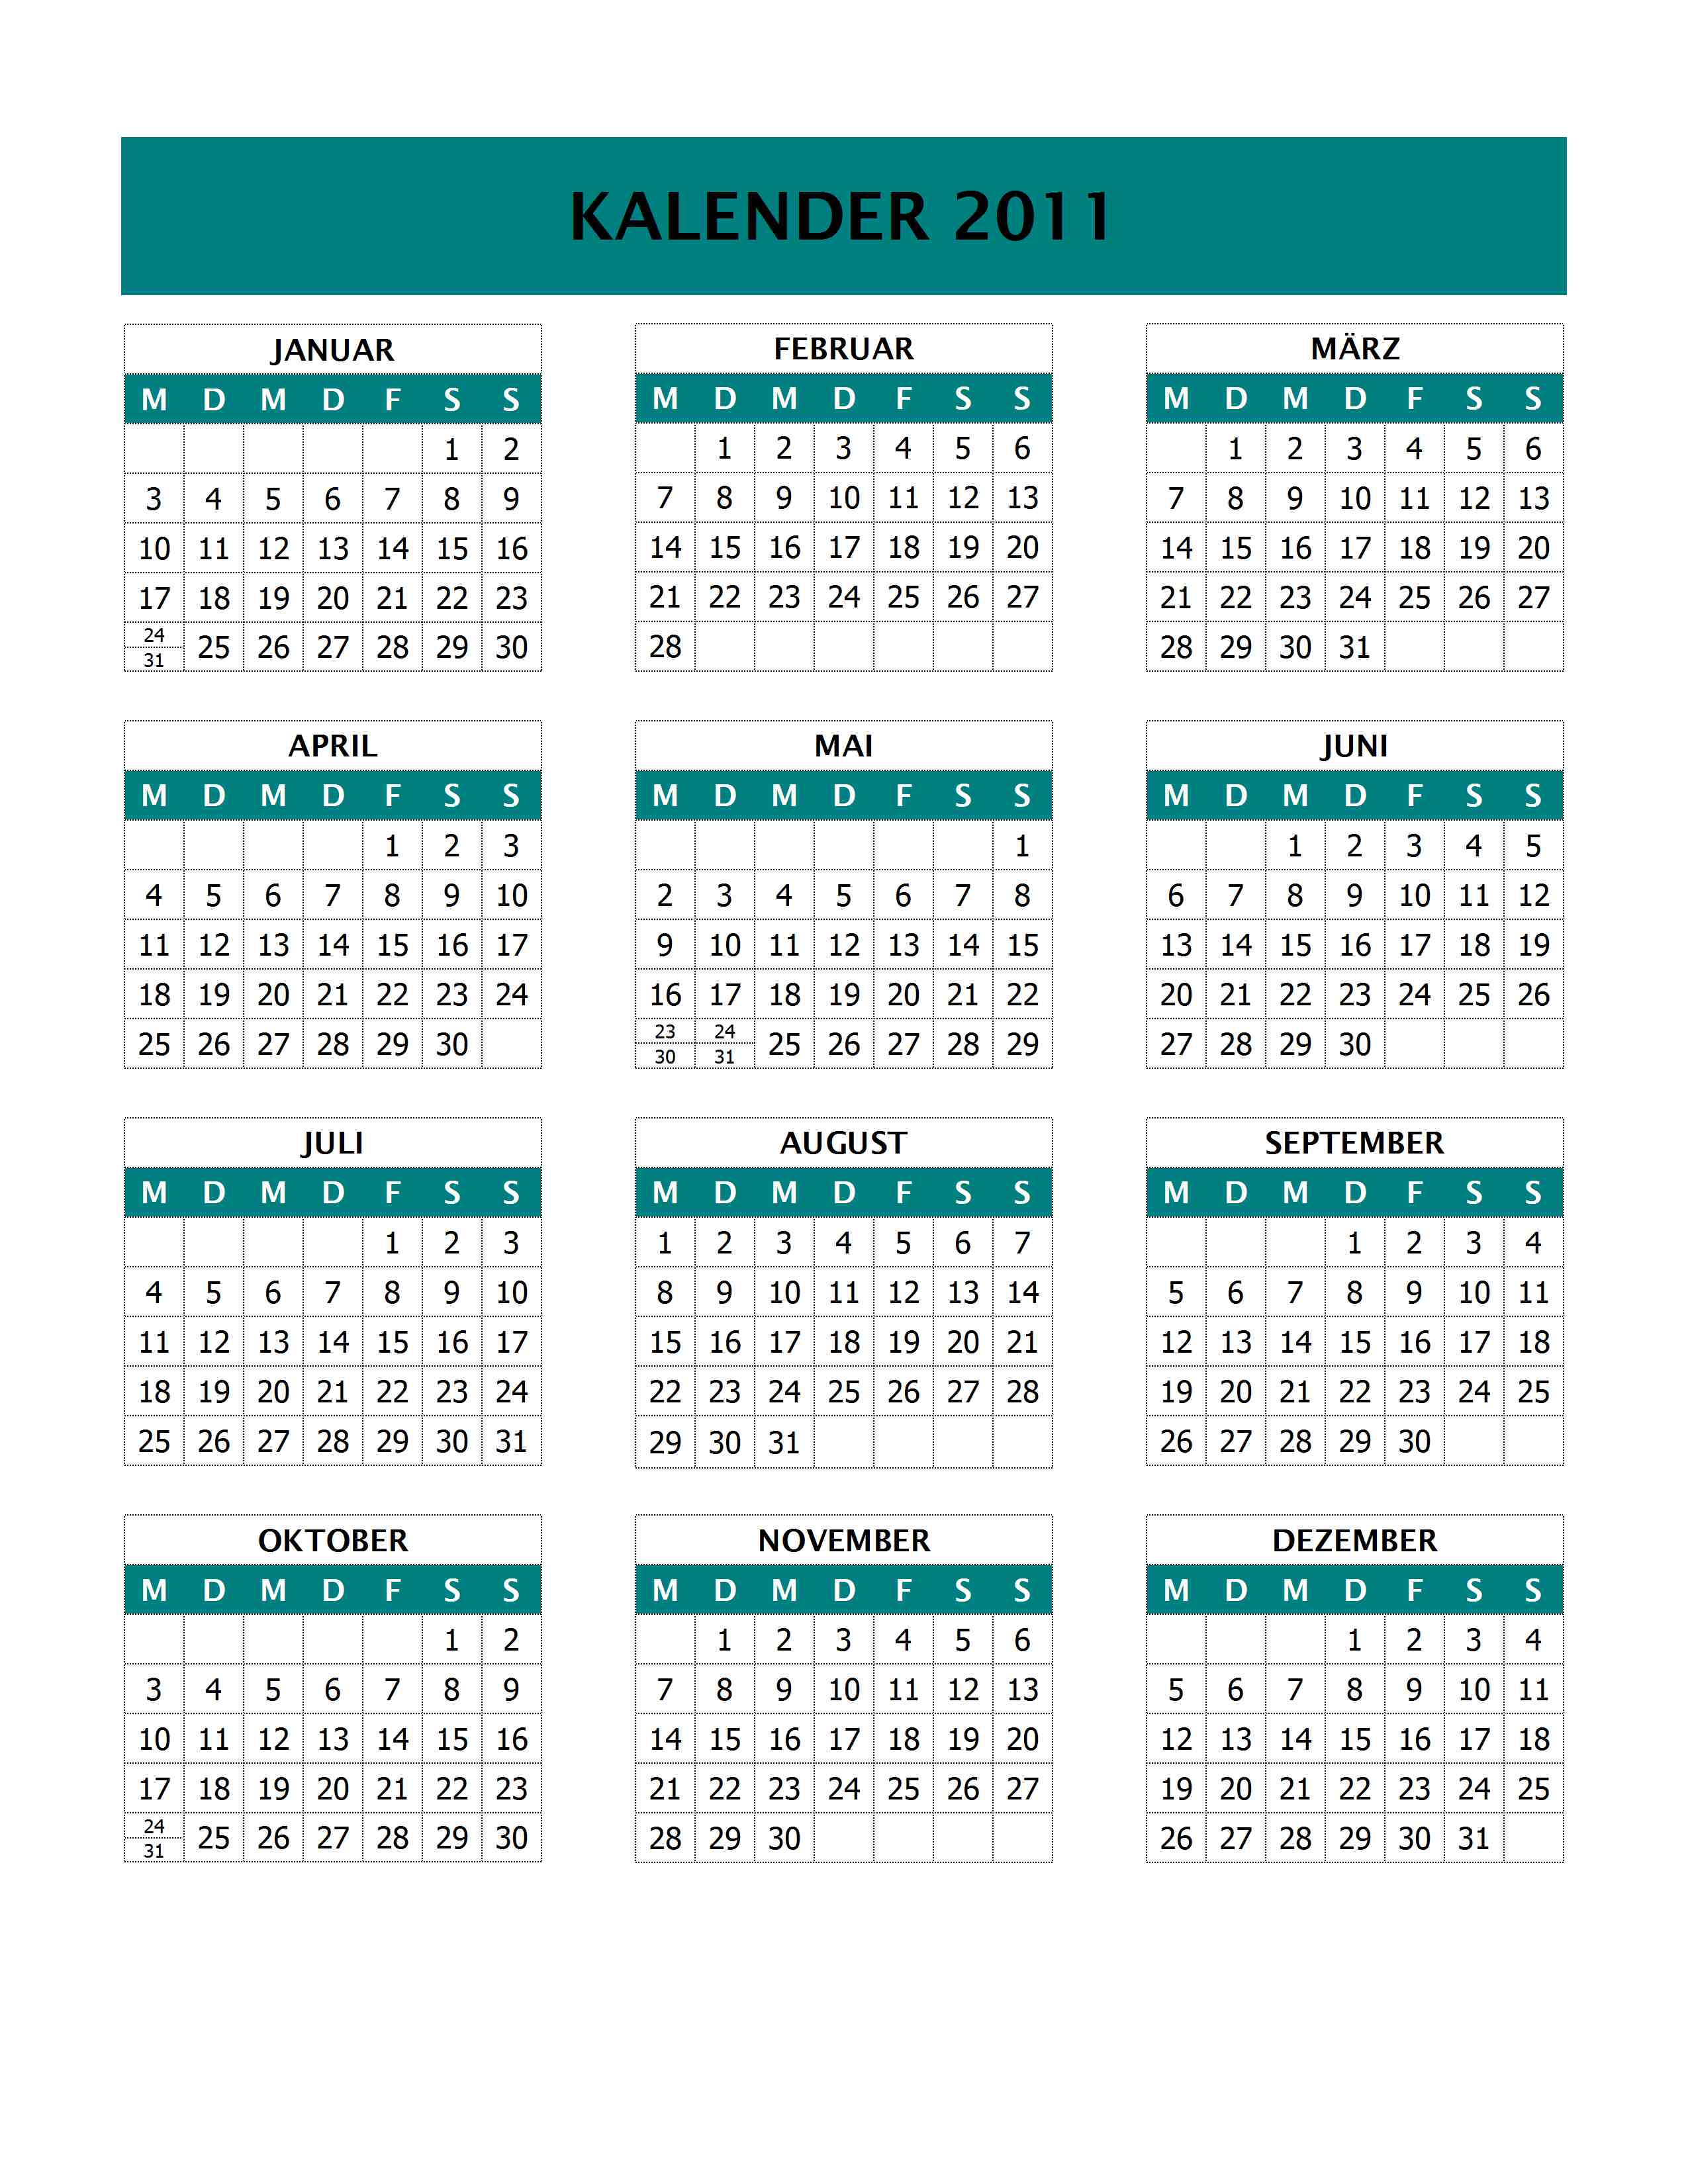 Kalender-2011